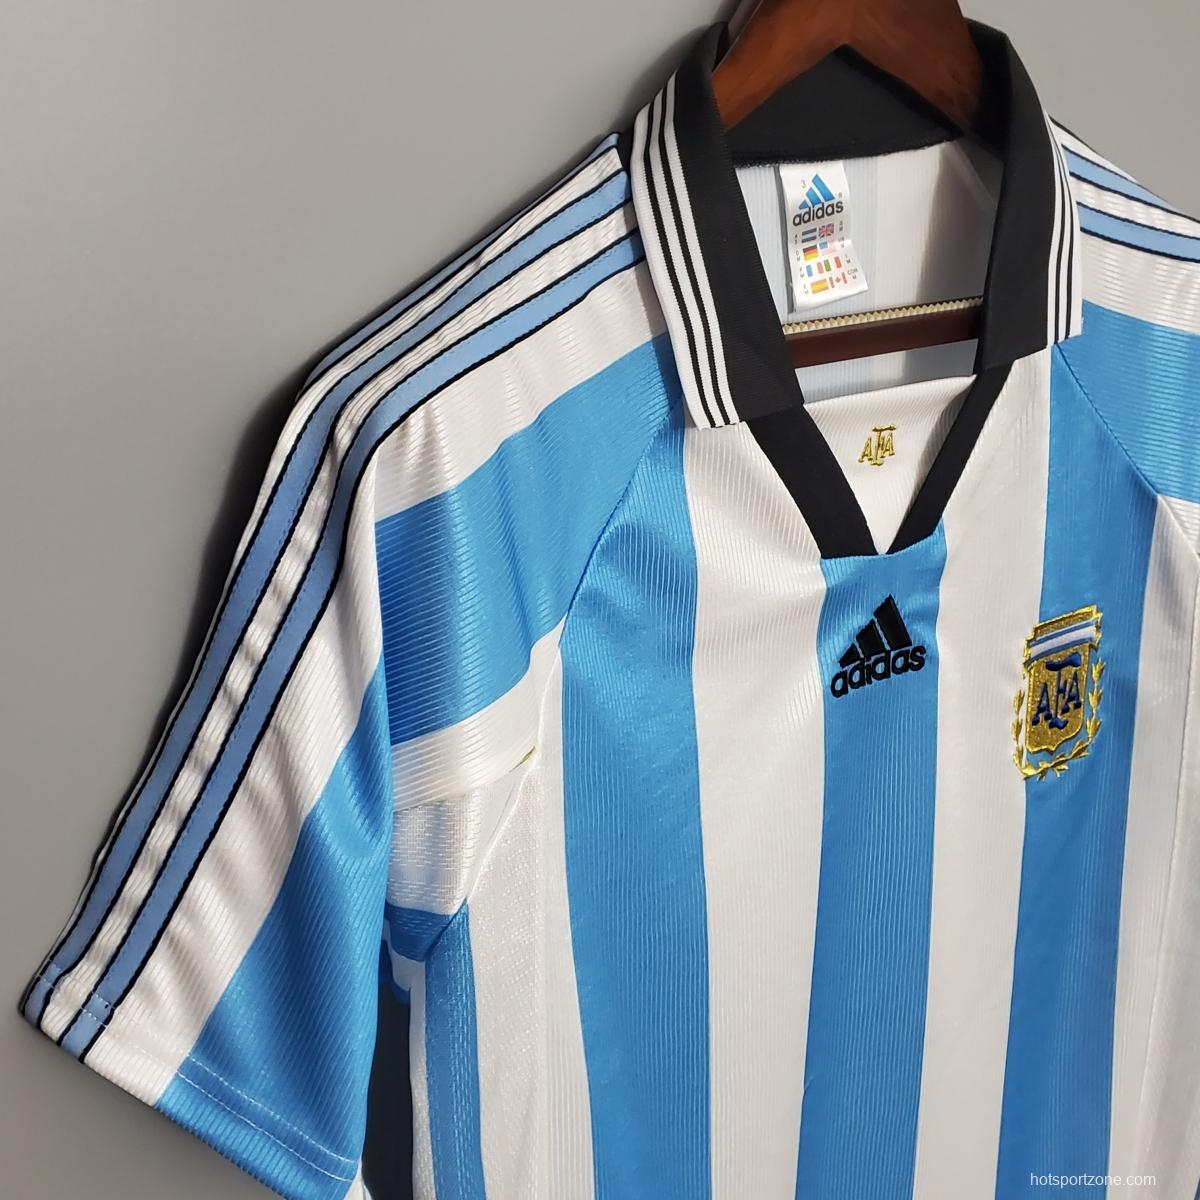 Retro Argentina 1998 home Soccer Jersey